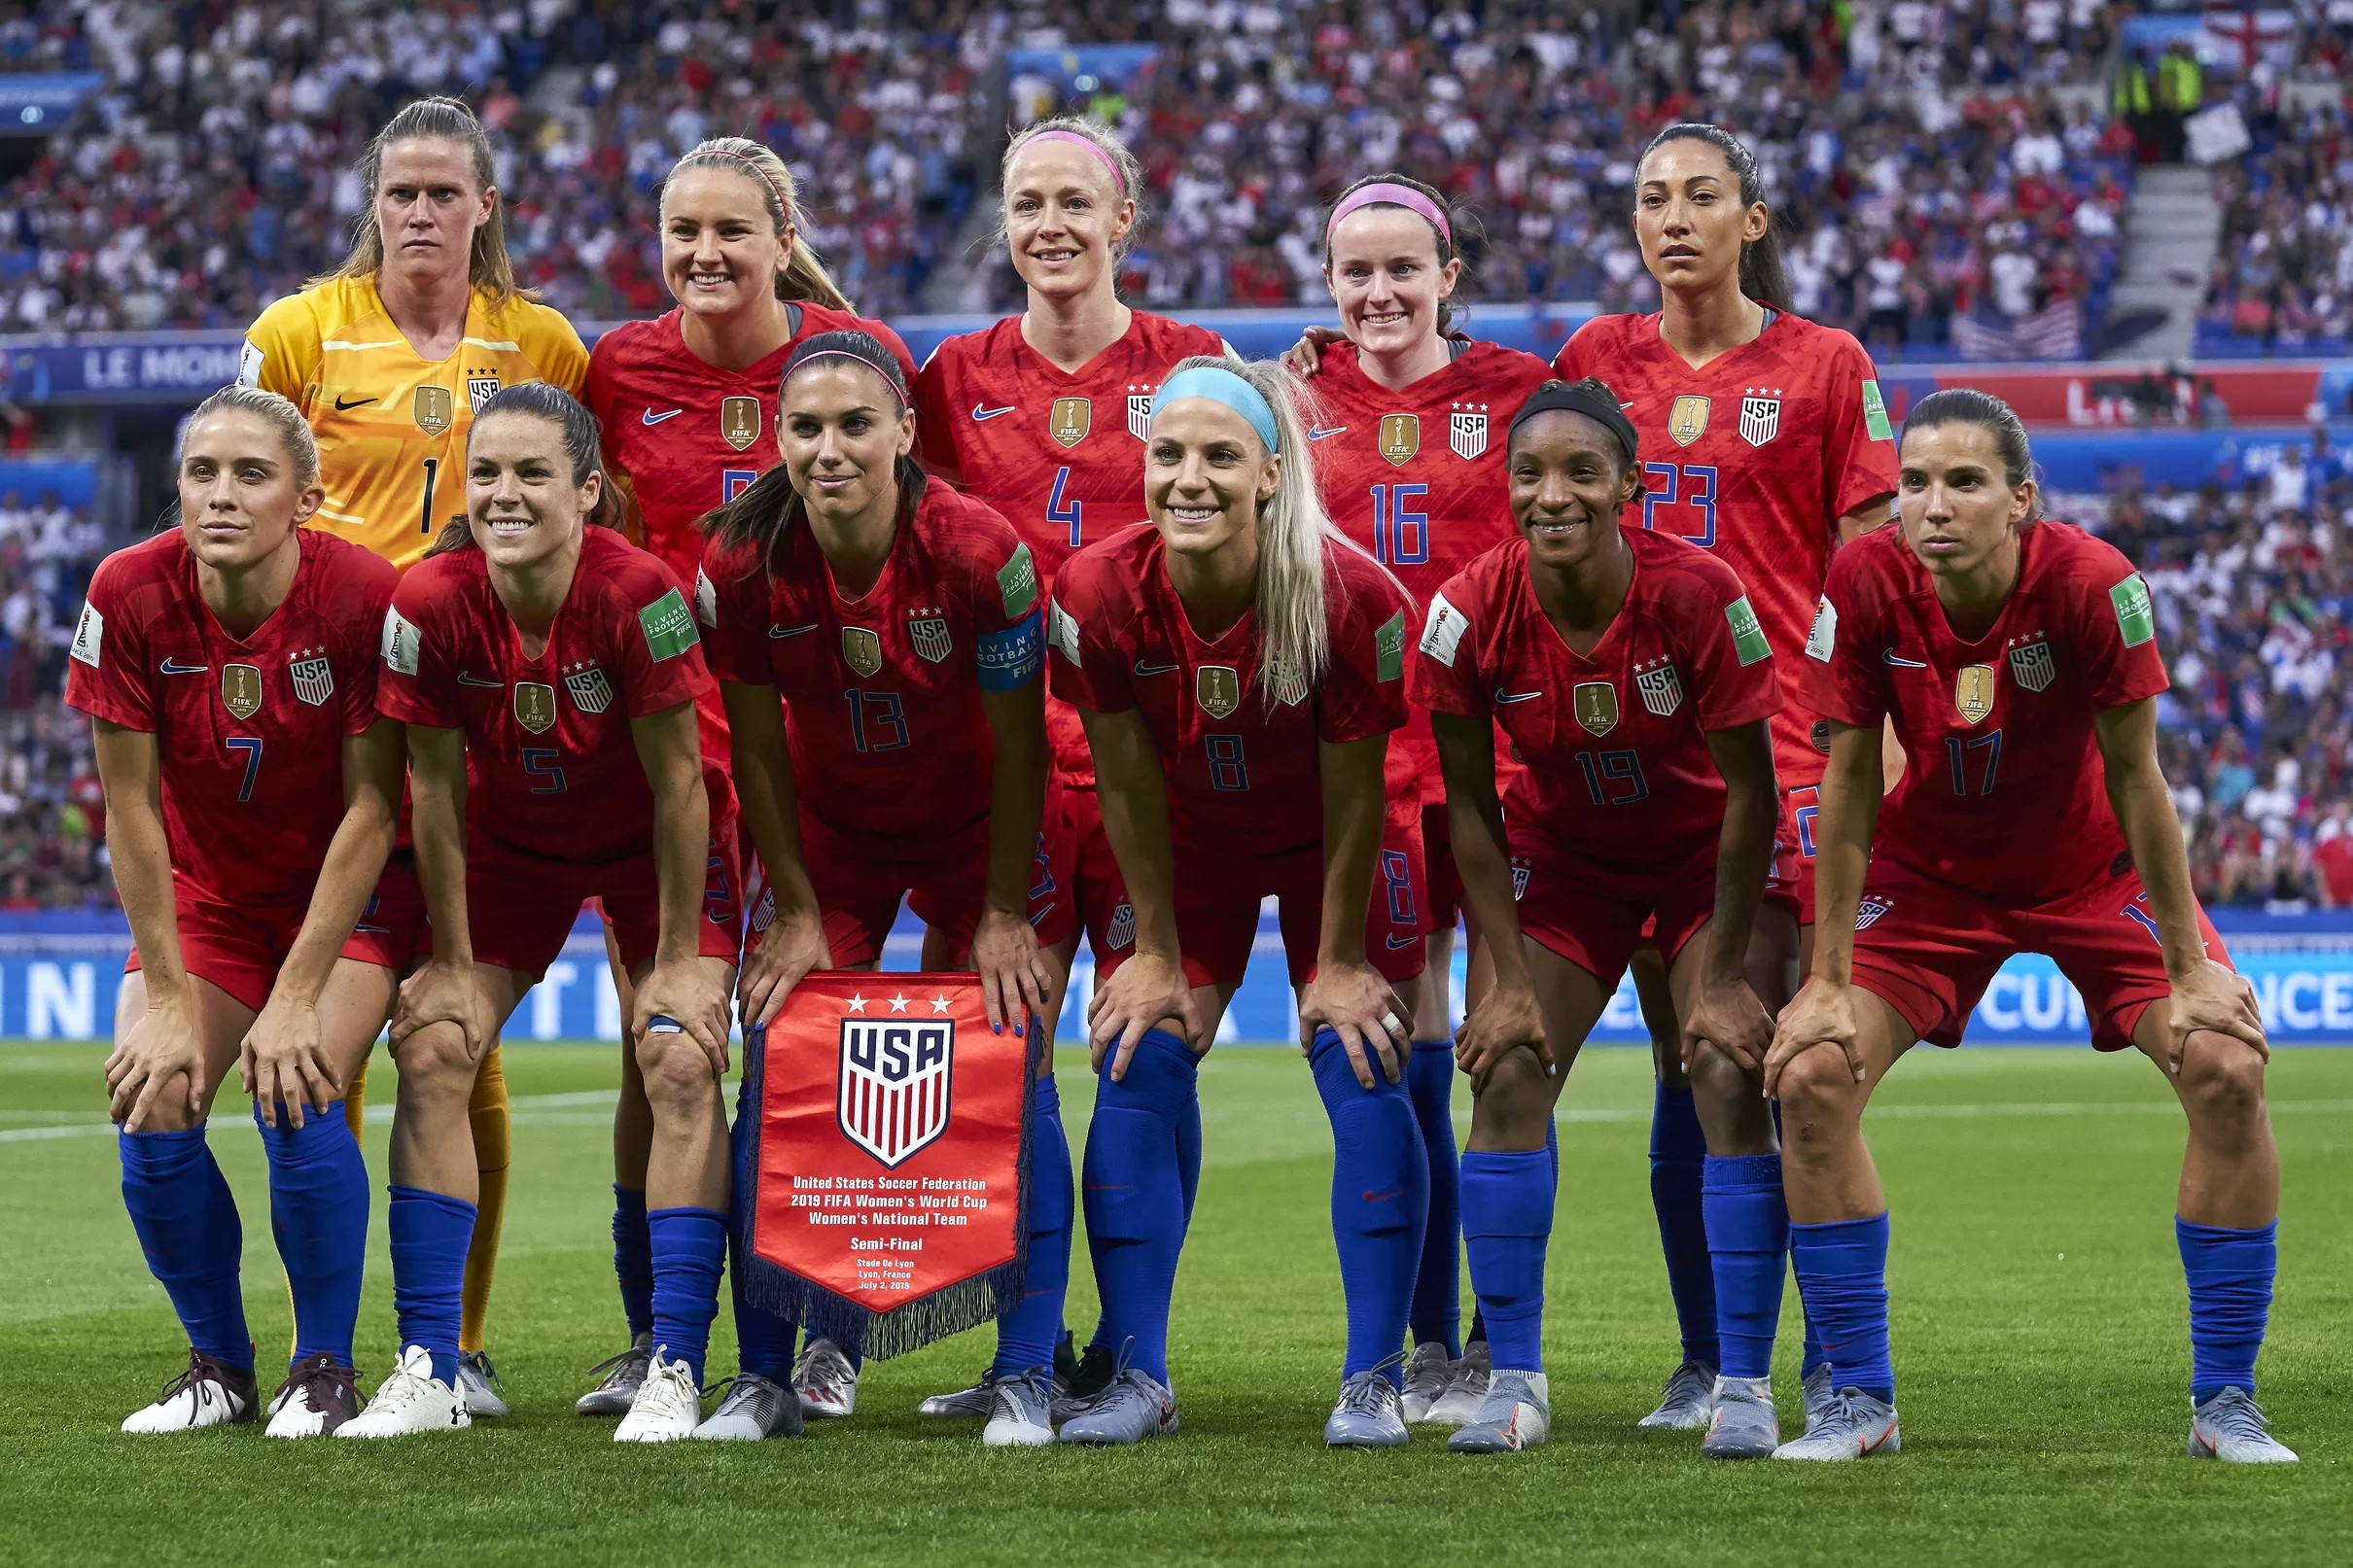 Fifa Women’s World Cup 2019 Final Uswnt Vs Netherlands Open Thread